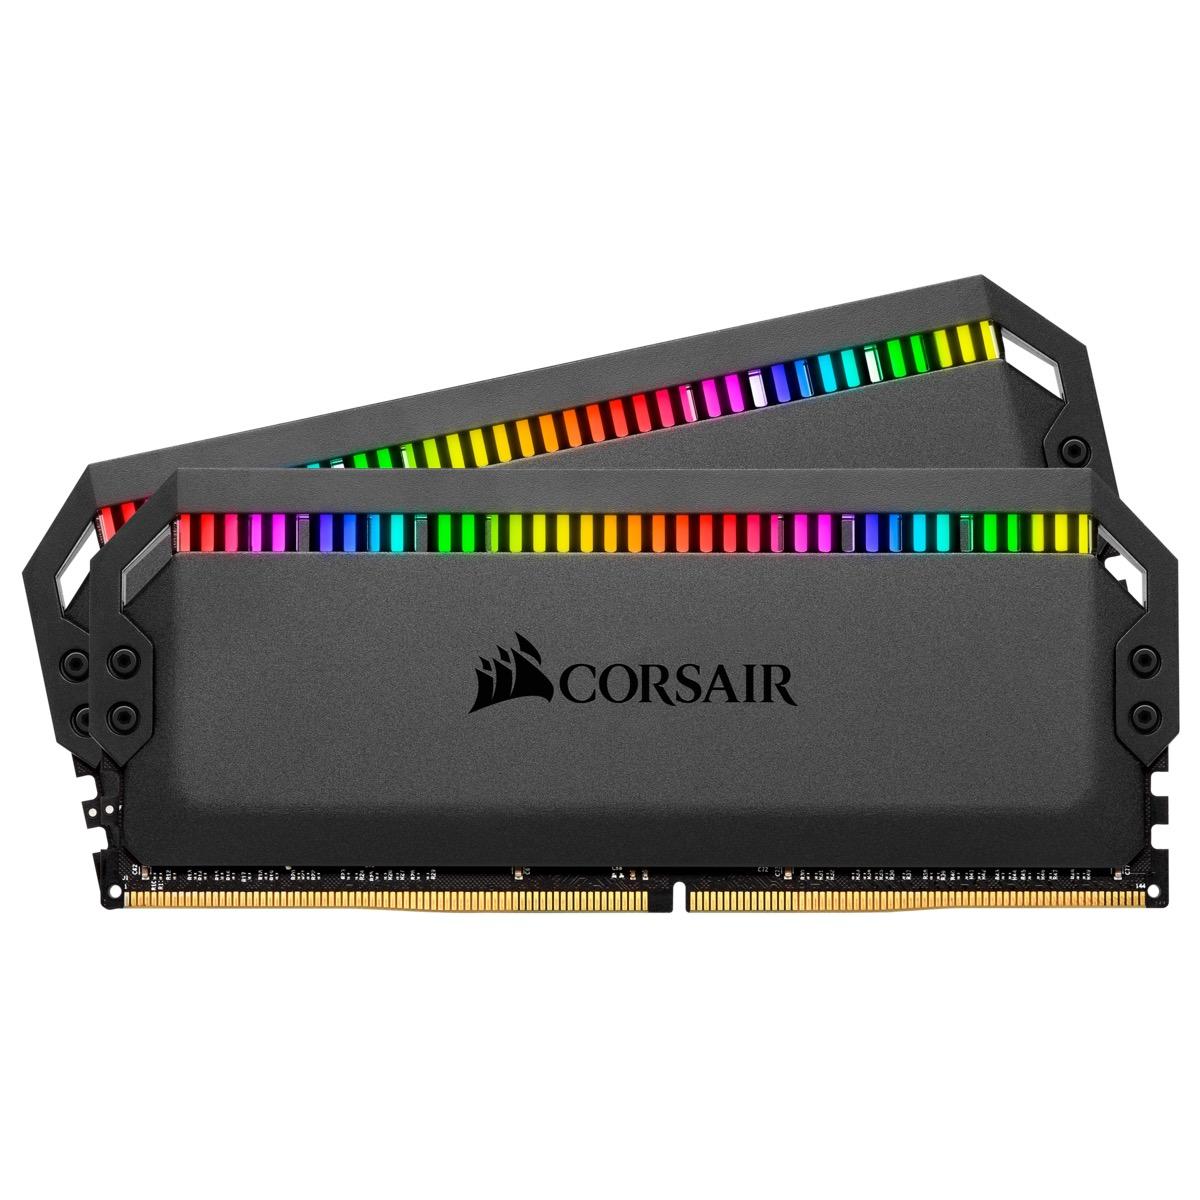 Памет Corsair Dominator Platinum RGB Black 32GB(2x16GB) DDR4 PC4-25600 3200MHz CL16 CMT32GX4M2C3200C16